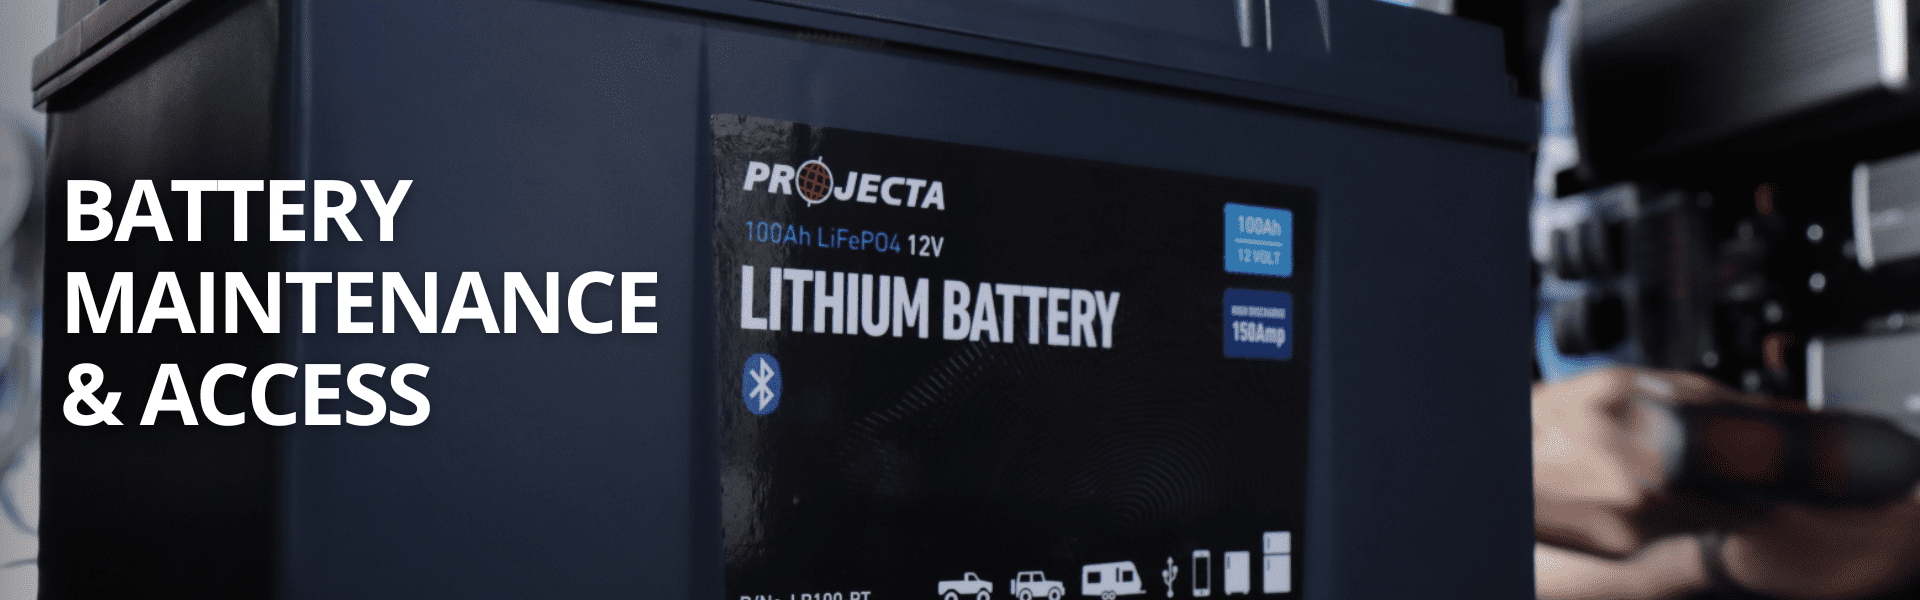 Battery Maintenance & Access